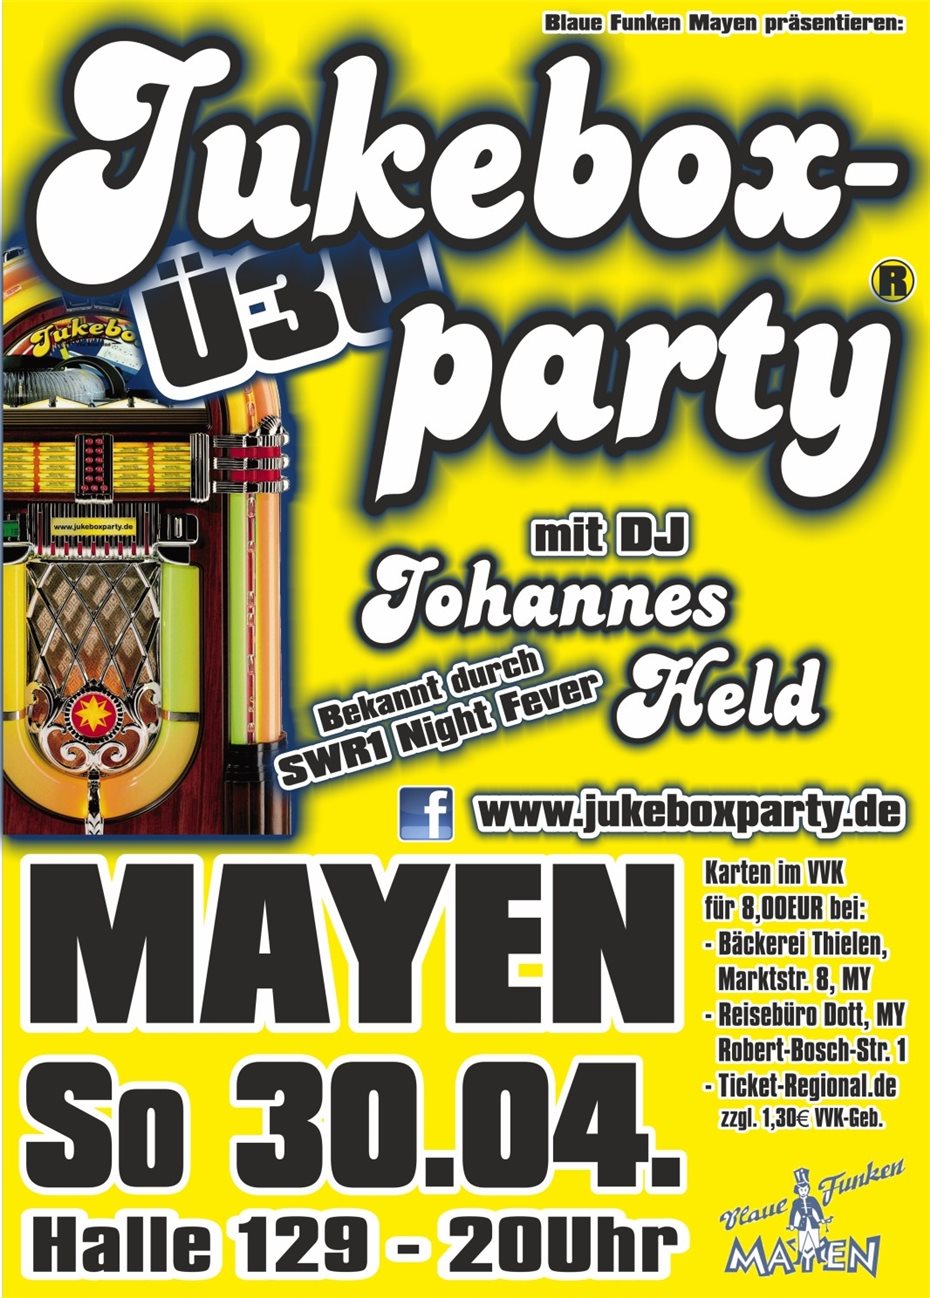 Jukeboxparty mit
DJ Johannes Held